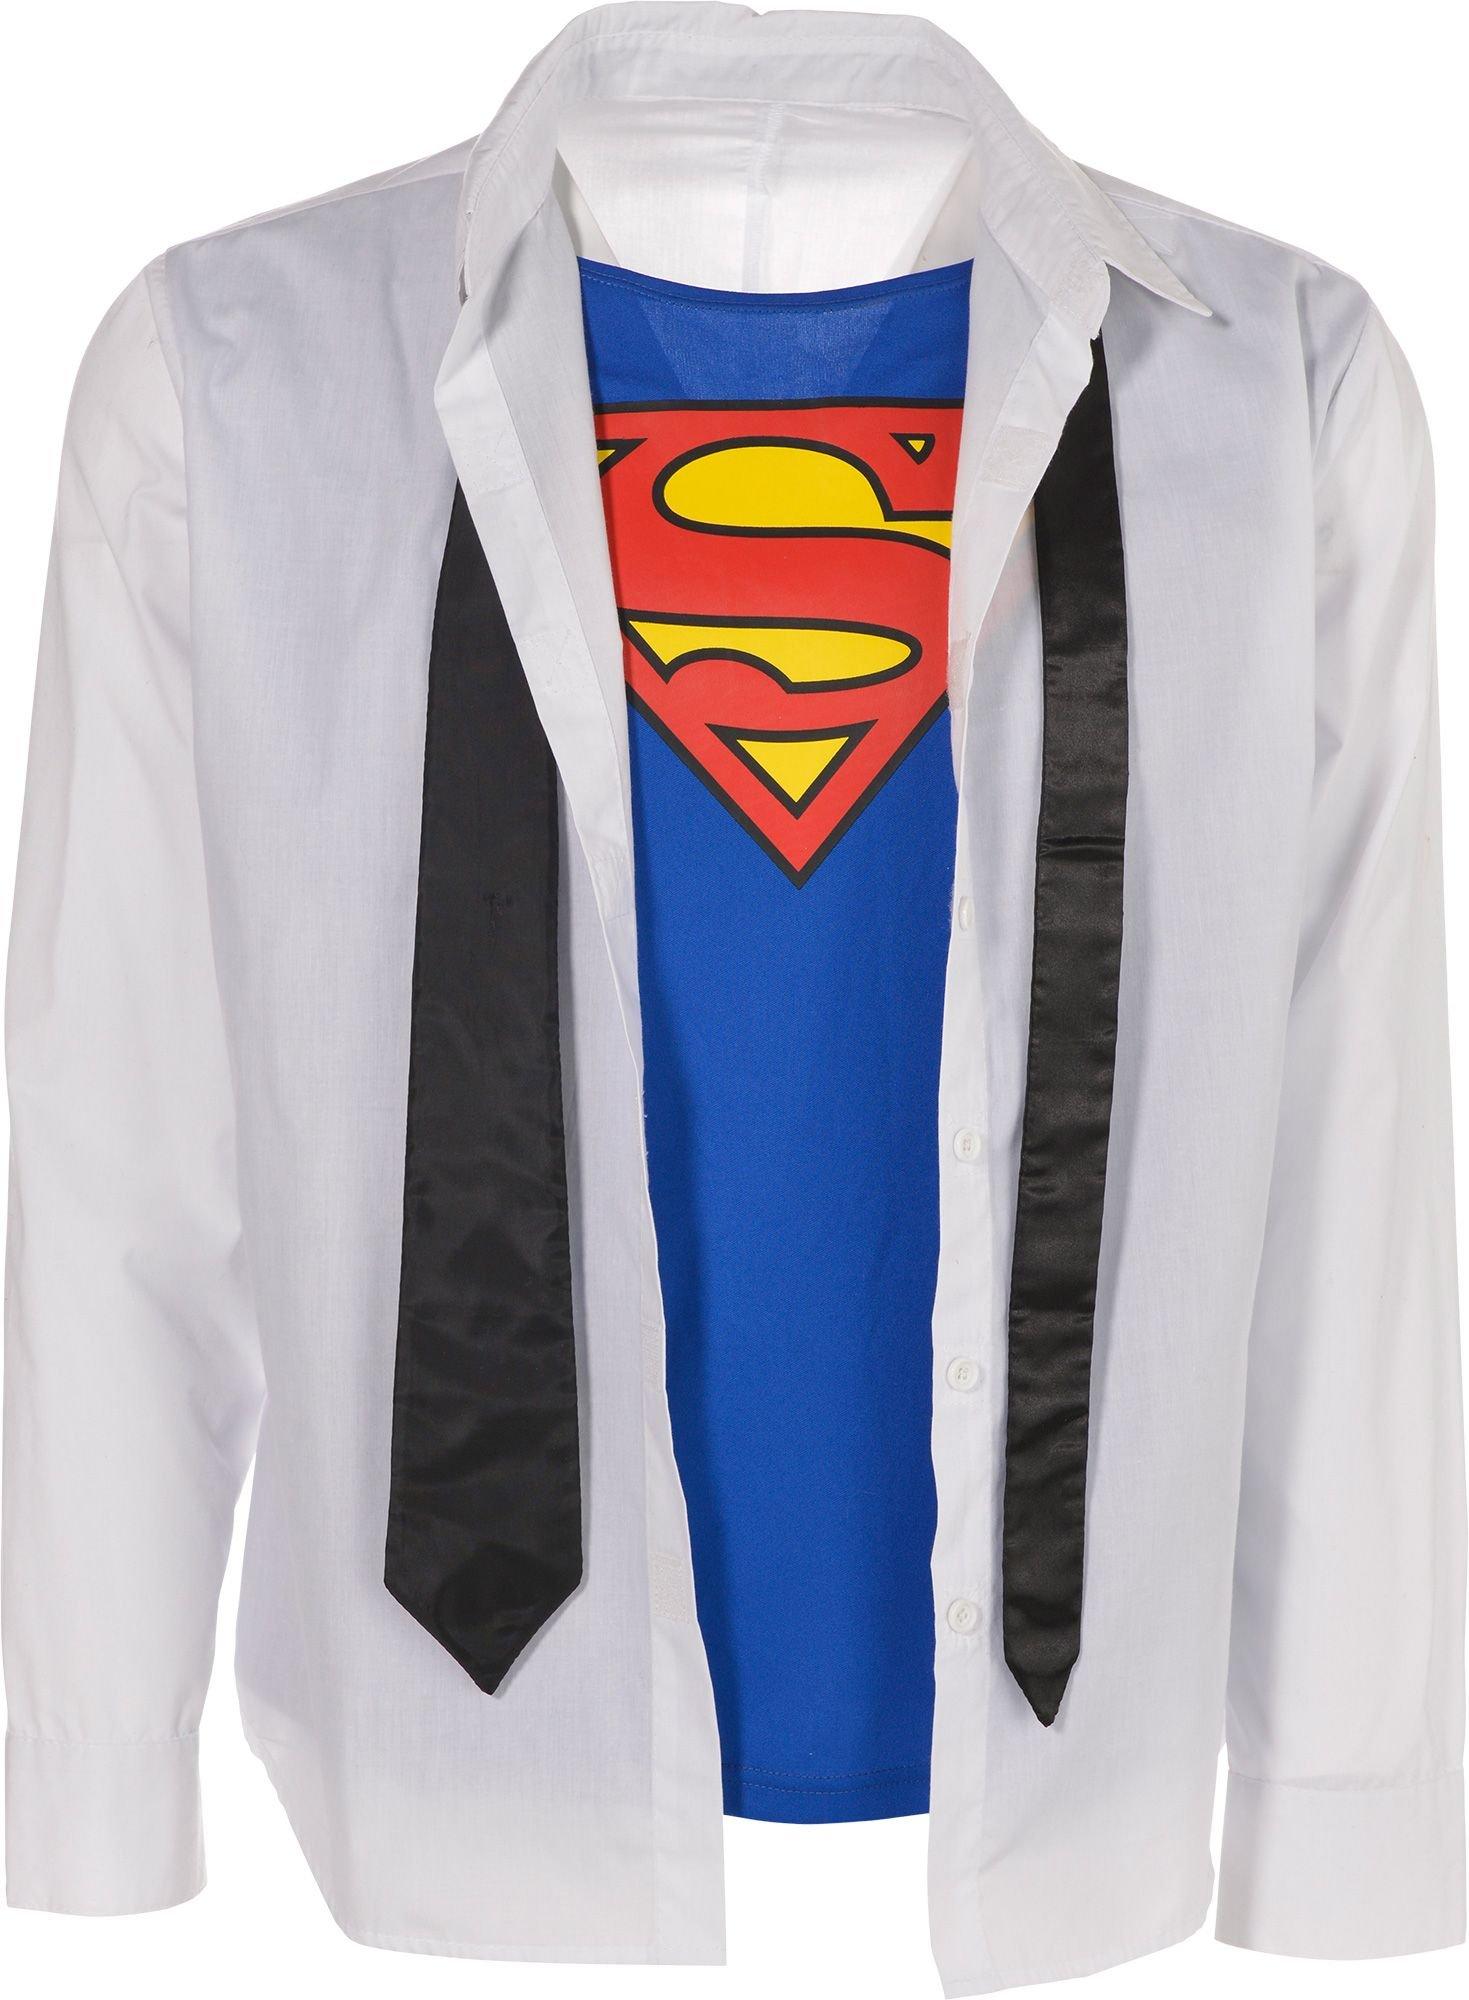 Adult Clark Kent Costume Accessory Kit - Superman